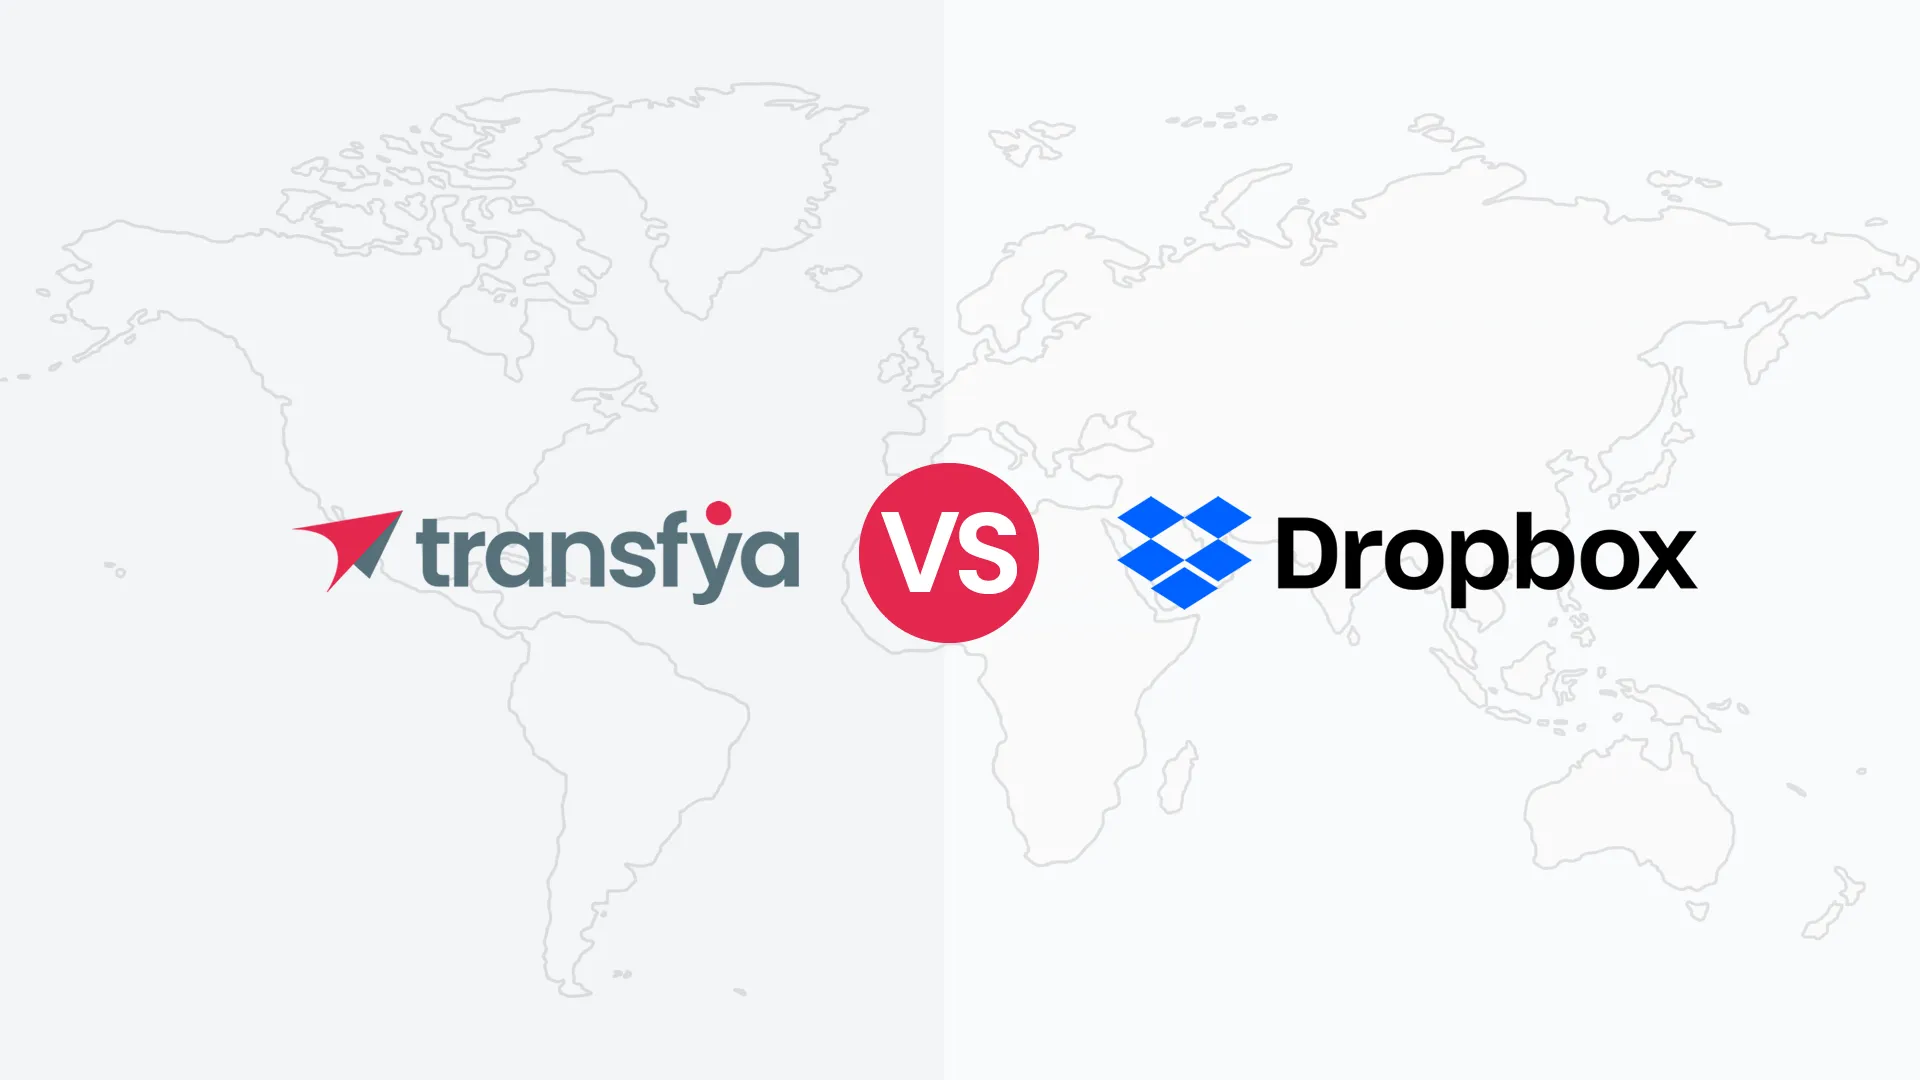 Transfya VS Dropbox